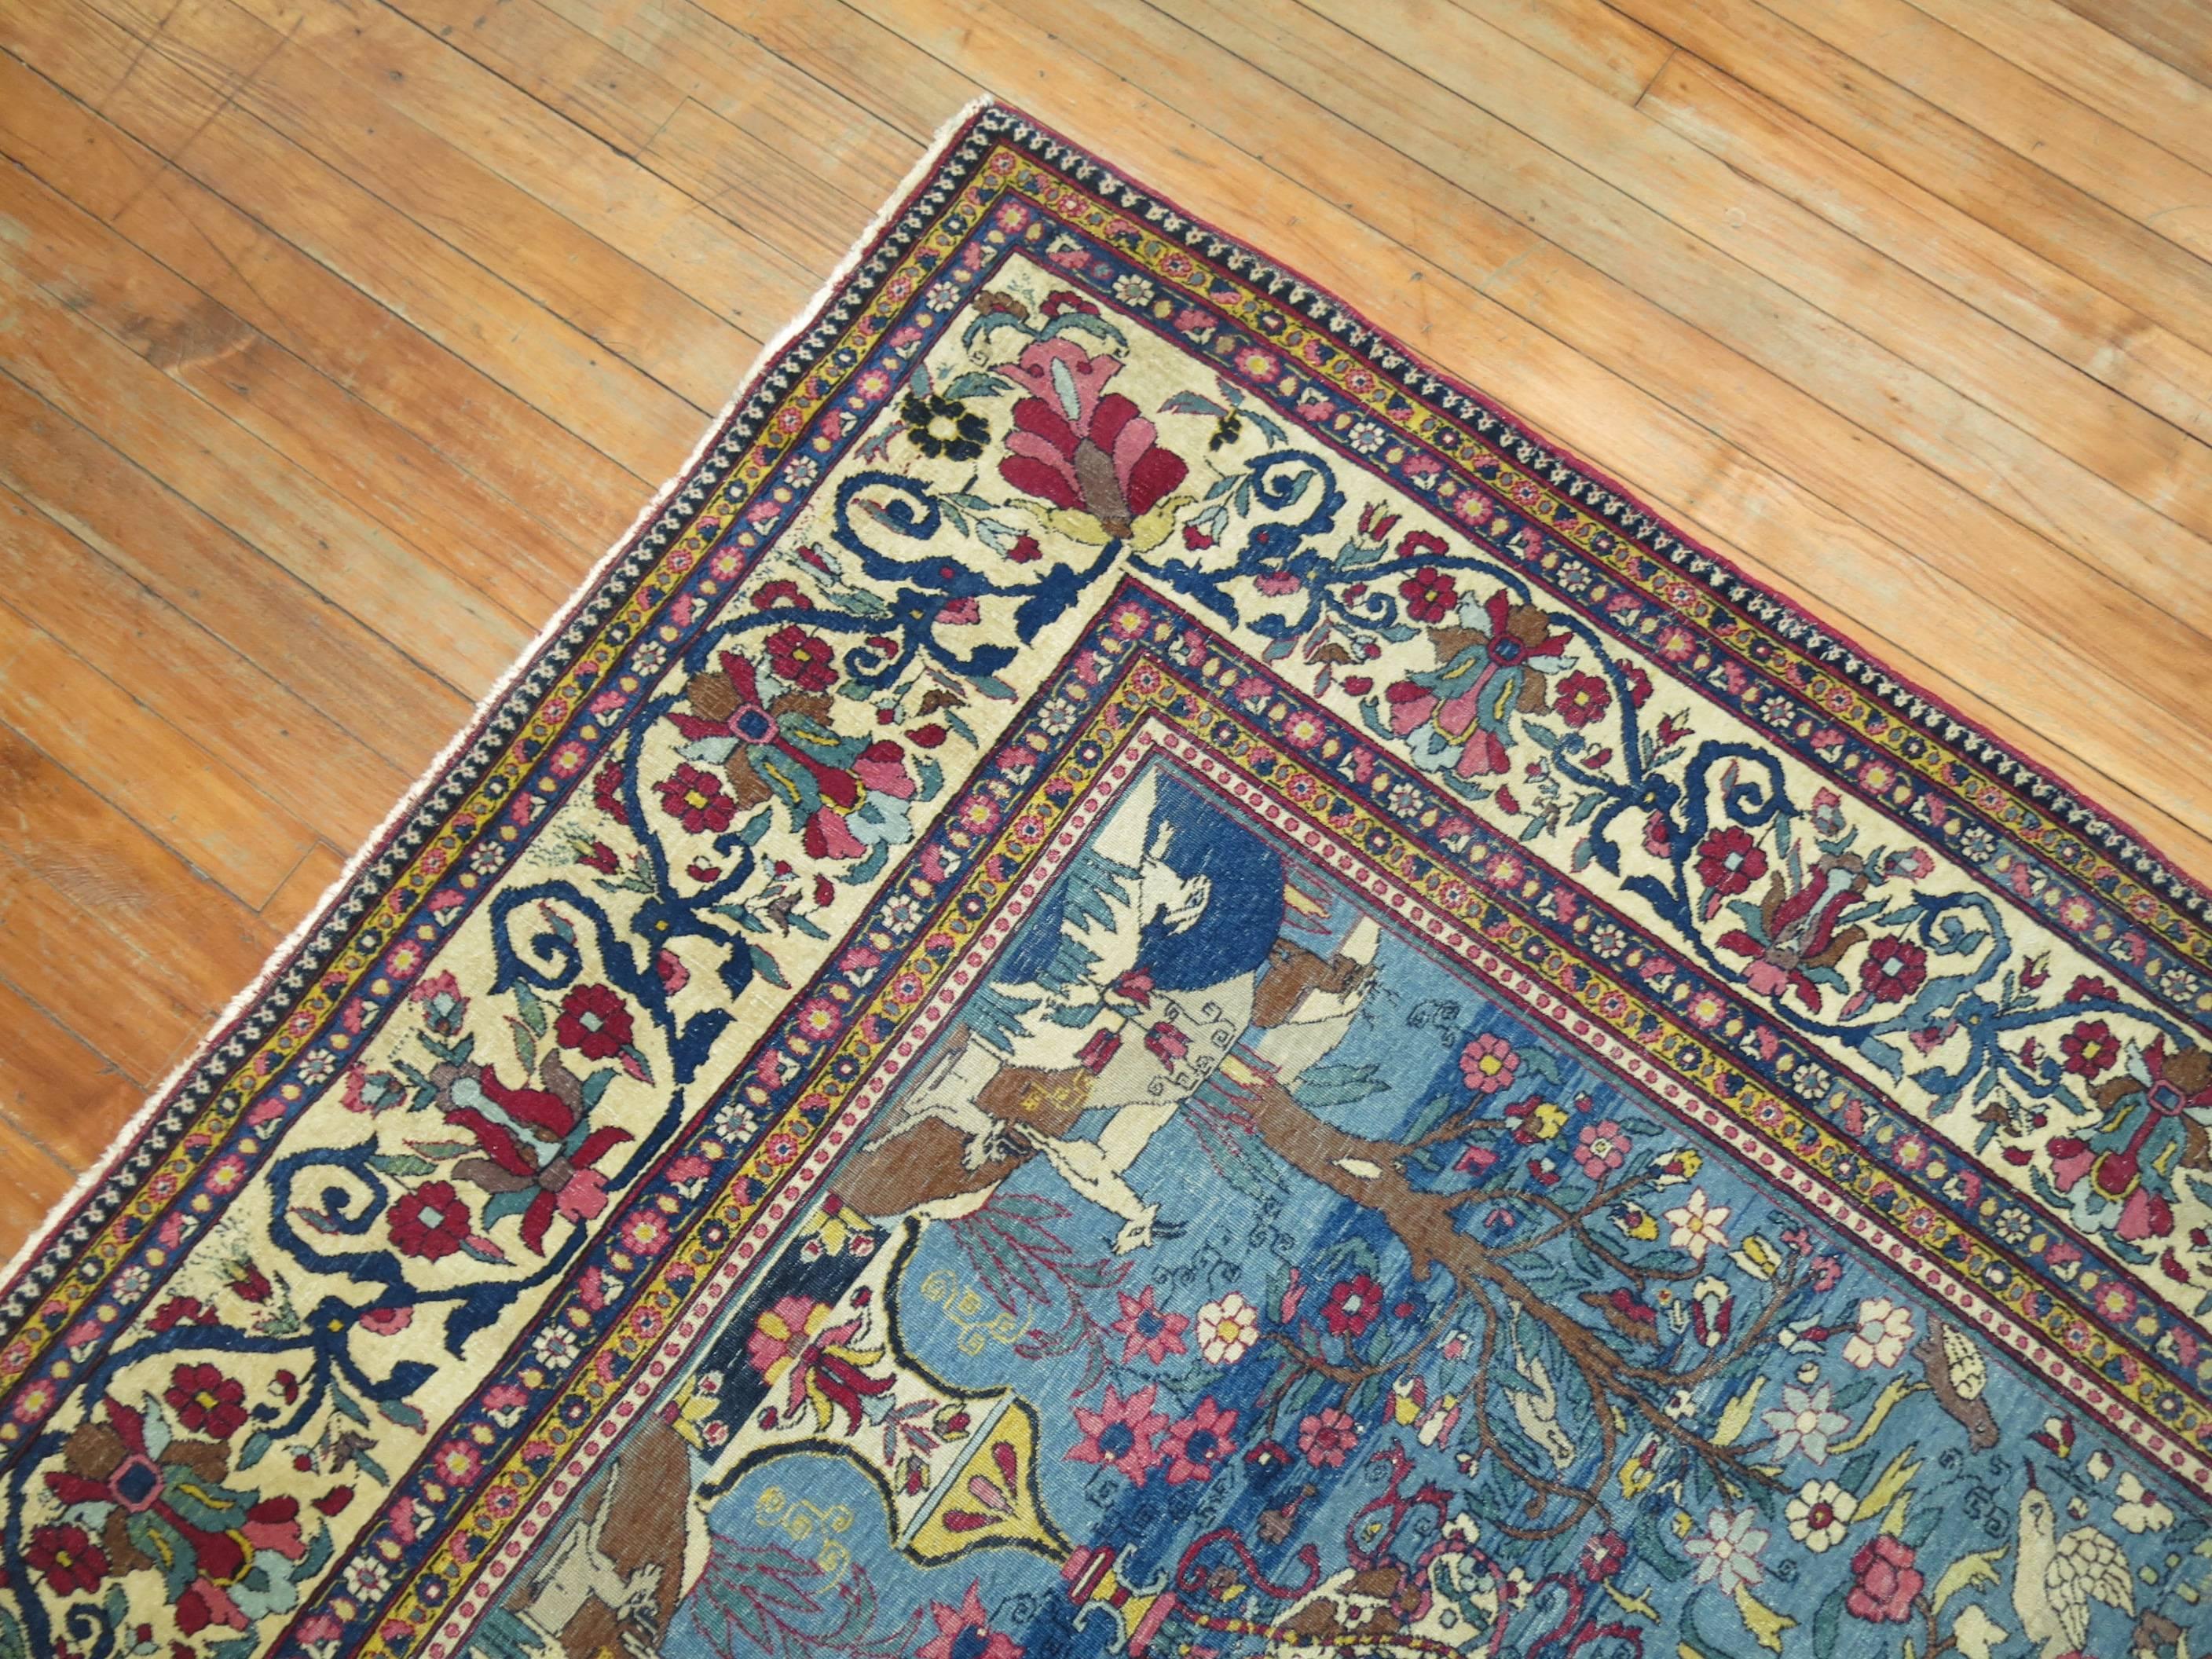 20th Century Pictorial Persian Isfahan Prayer Carpet